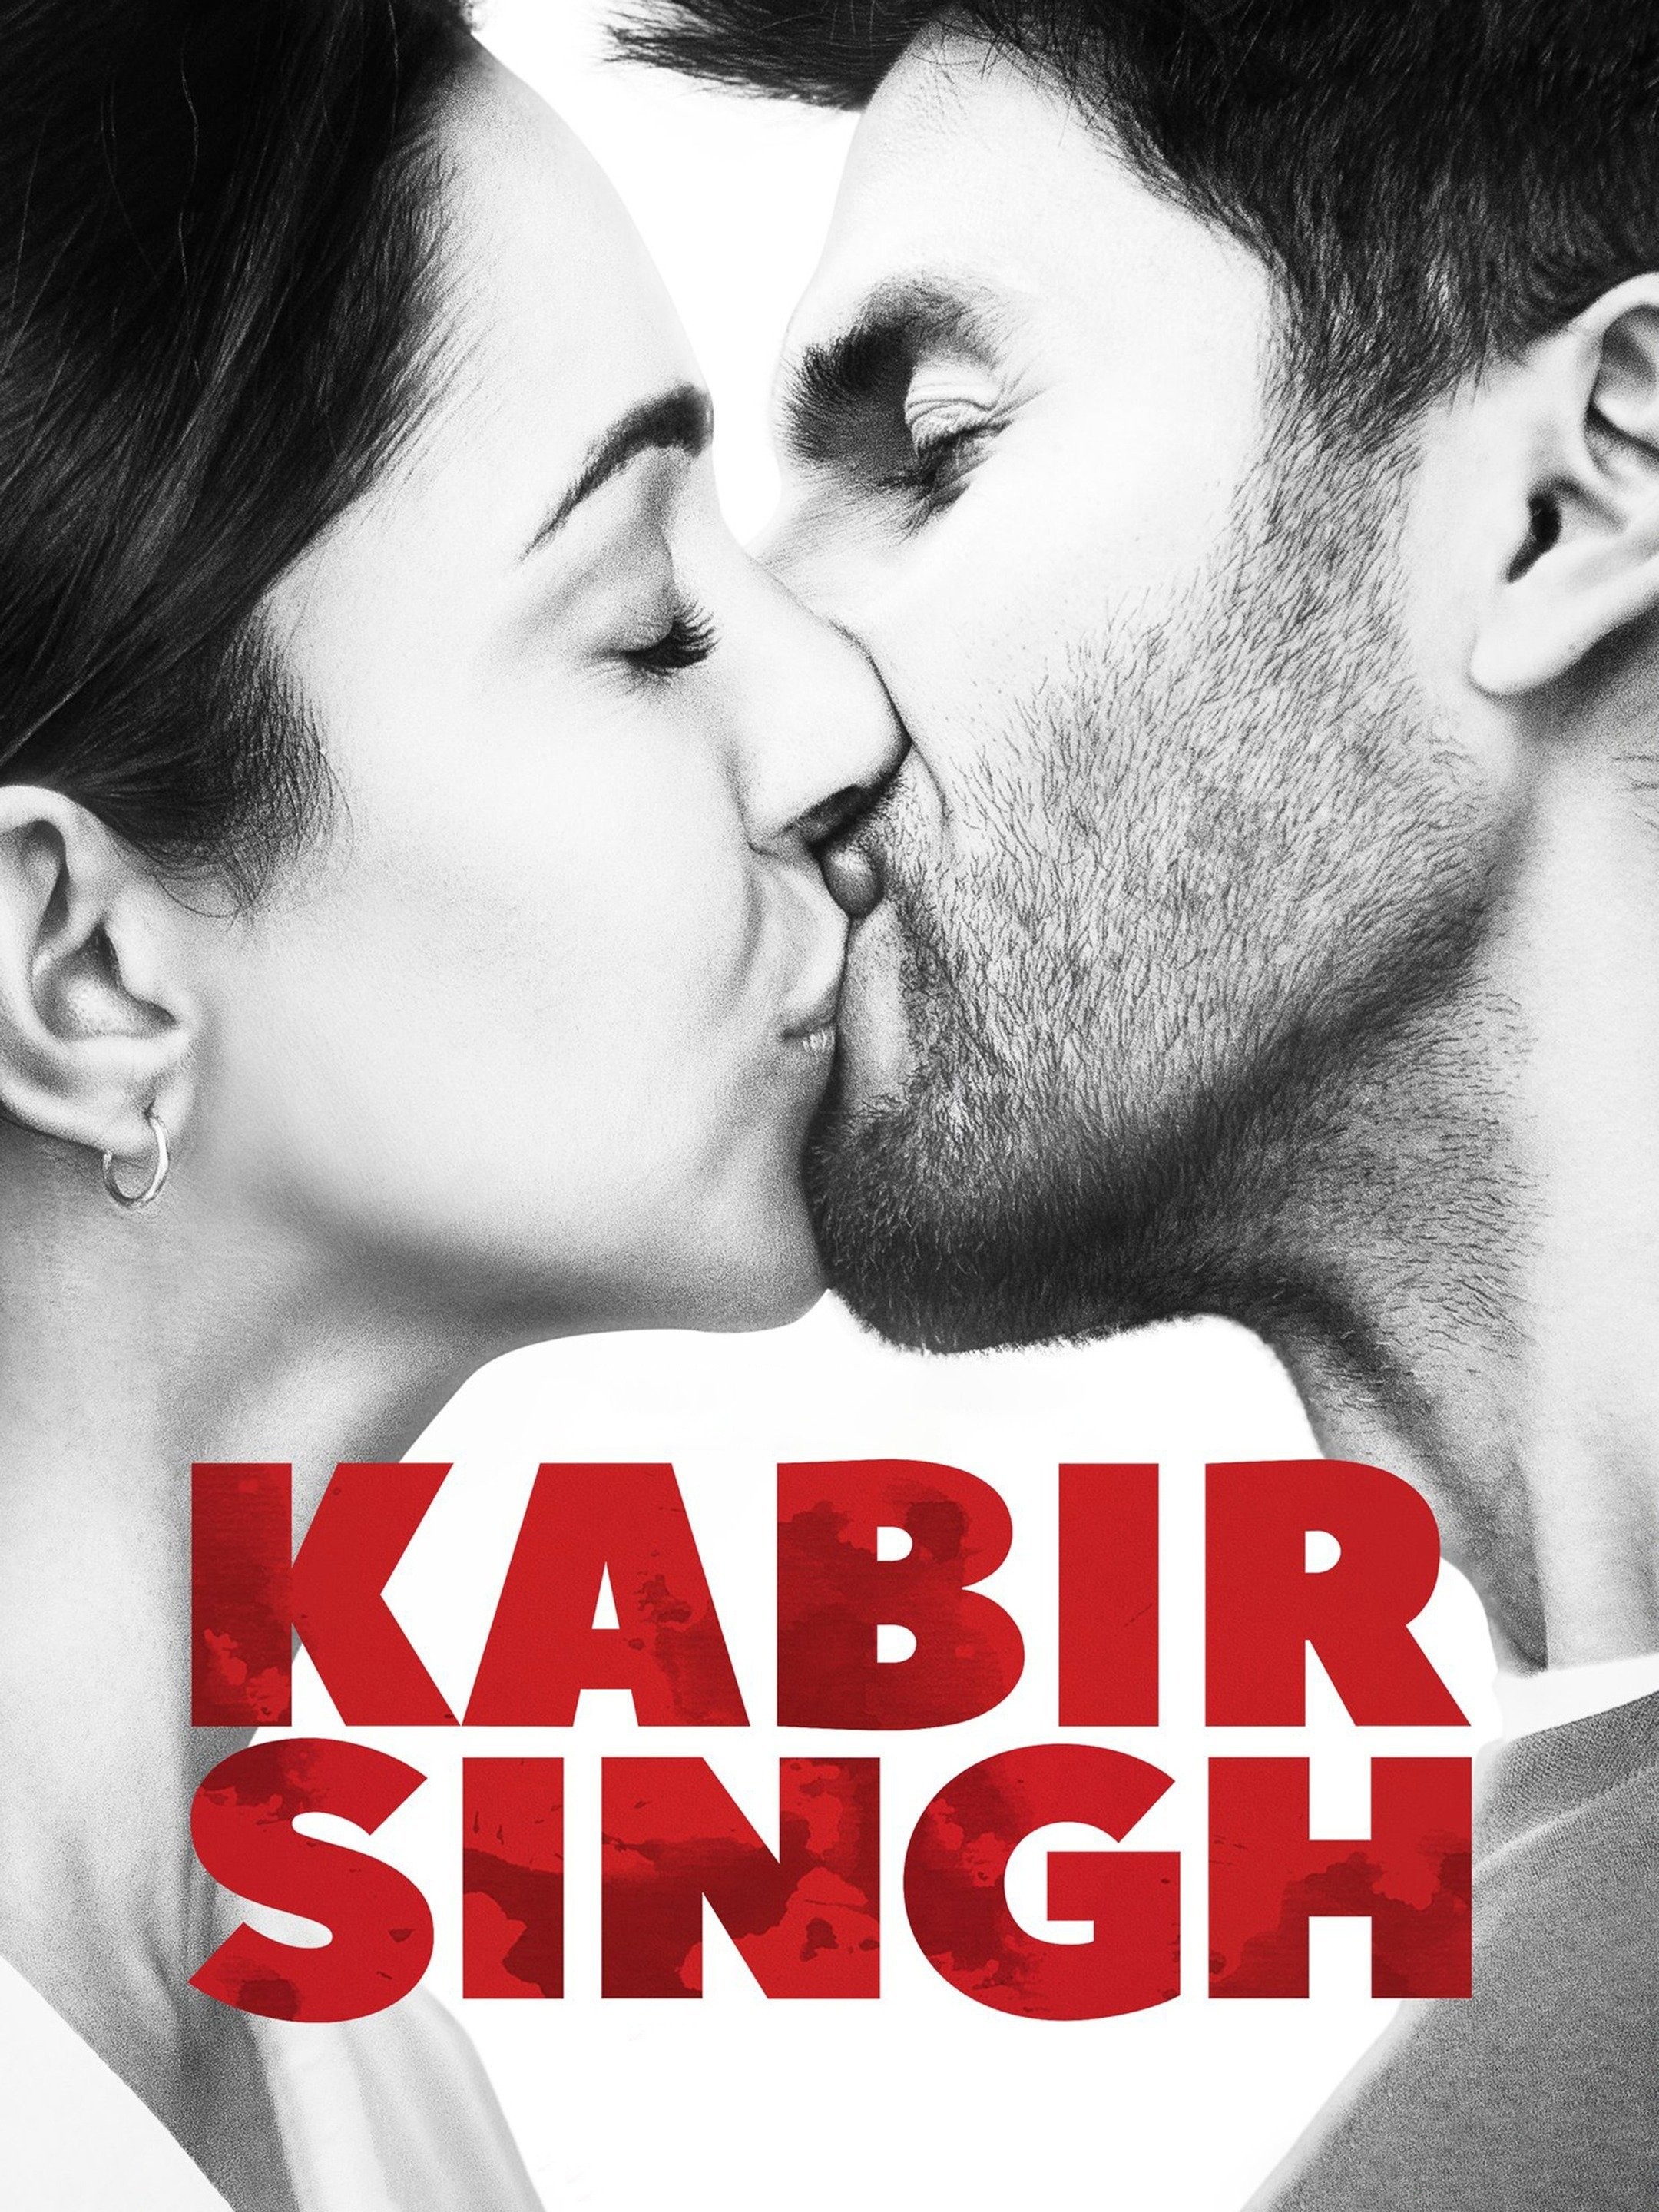 Kabir Singh first look: Shahid Kapoor to play lead role in Arjun Reddy  Hindi remake | Bollywood News – India TV